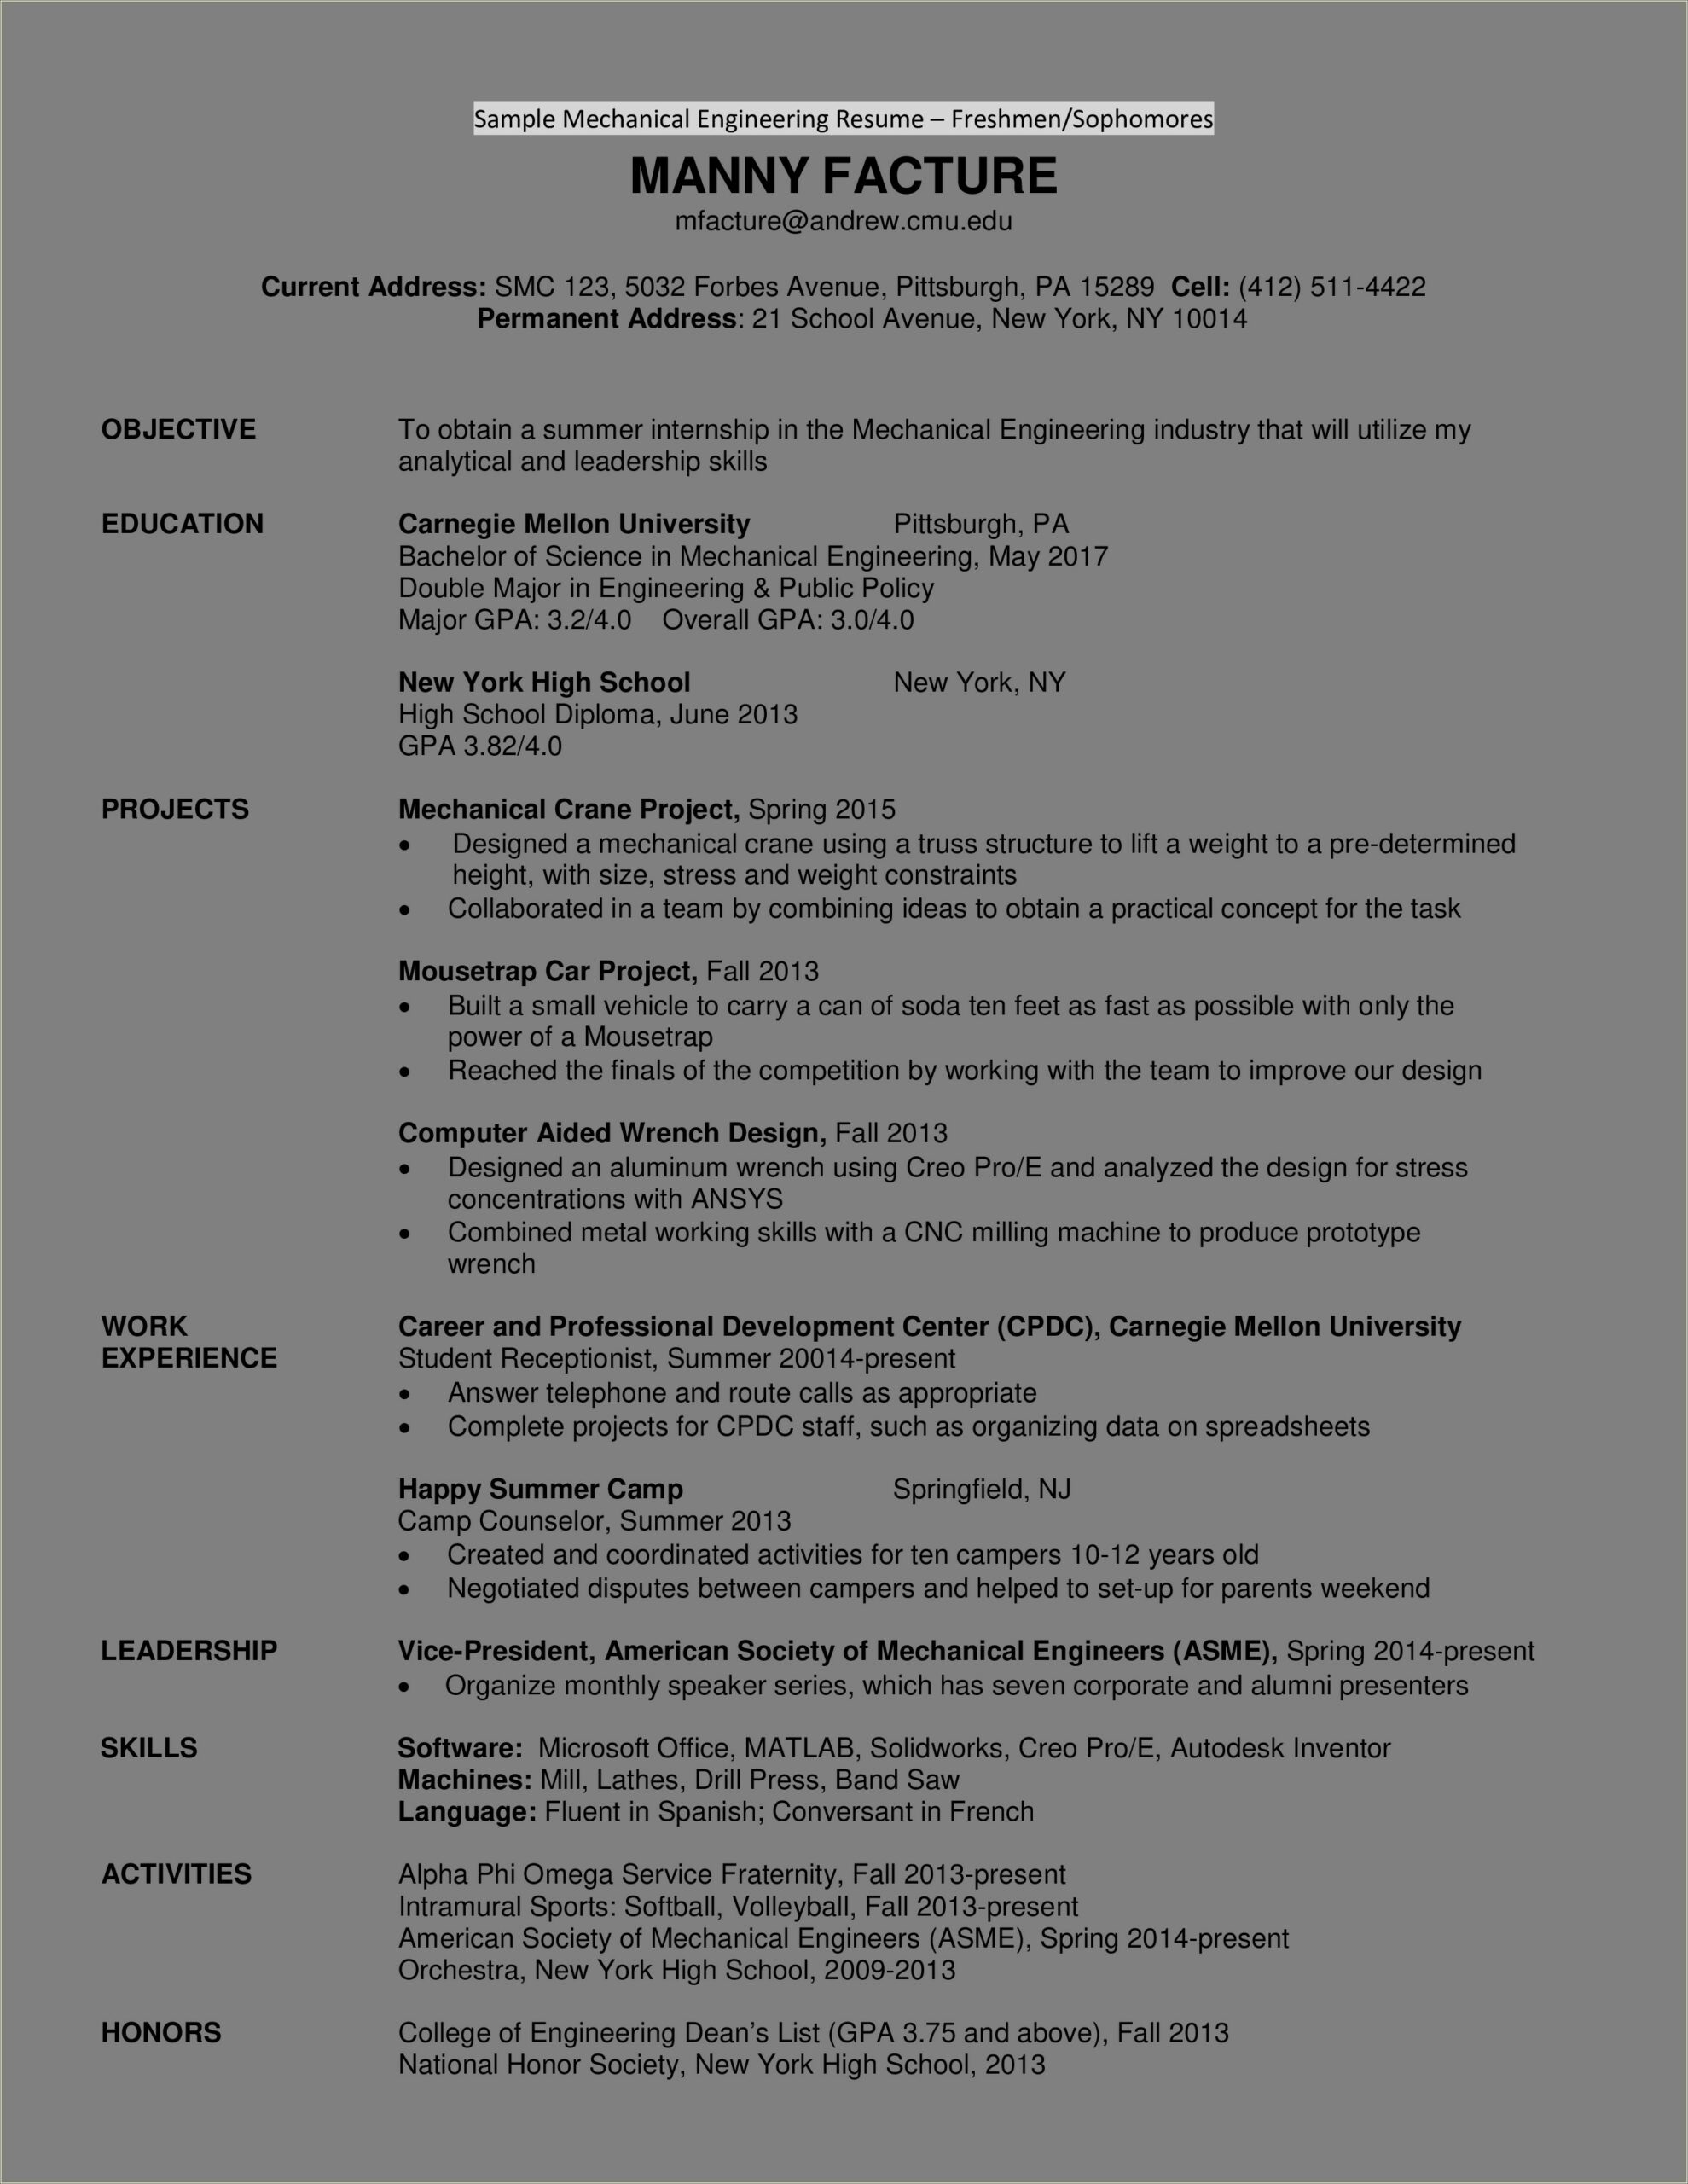 Engineering Summer Camp Counselor Job Description For Resume